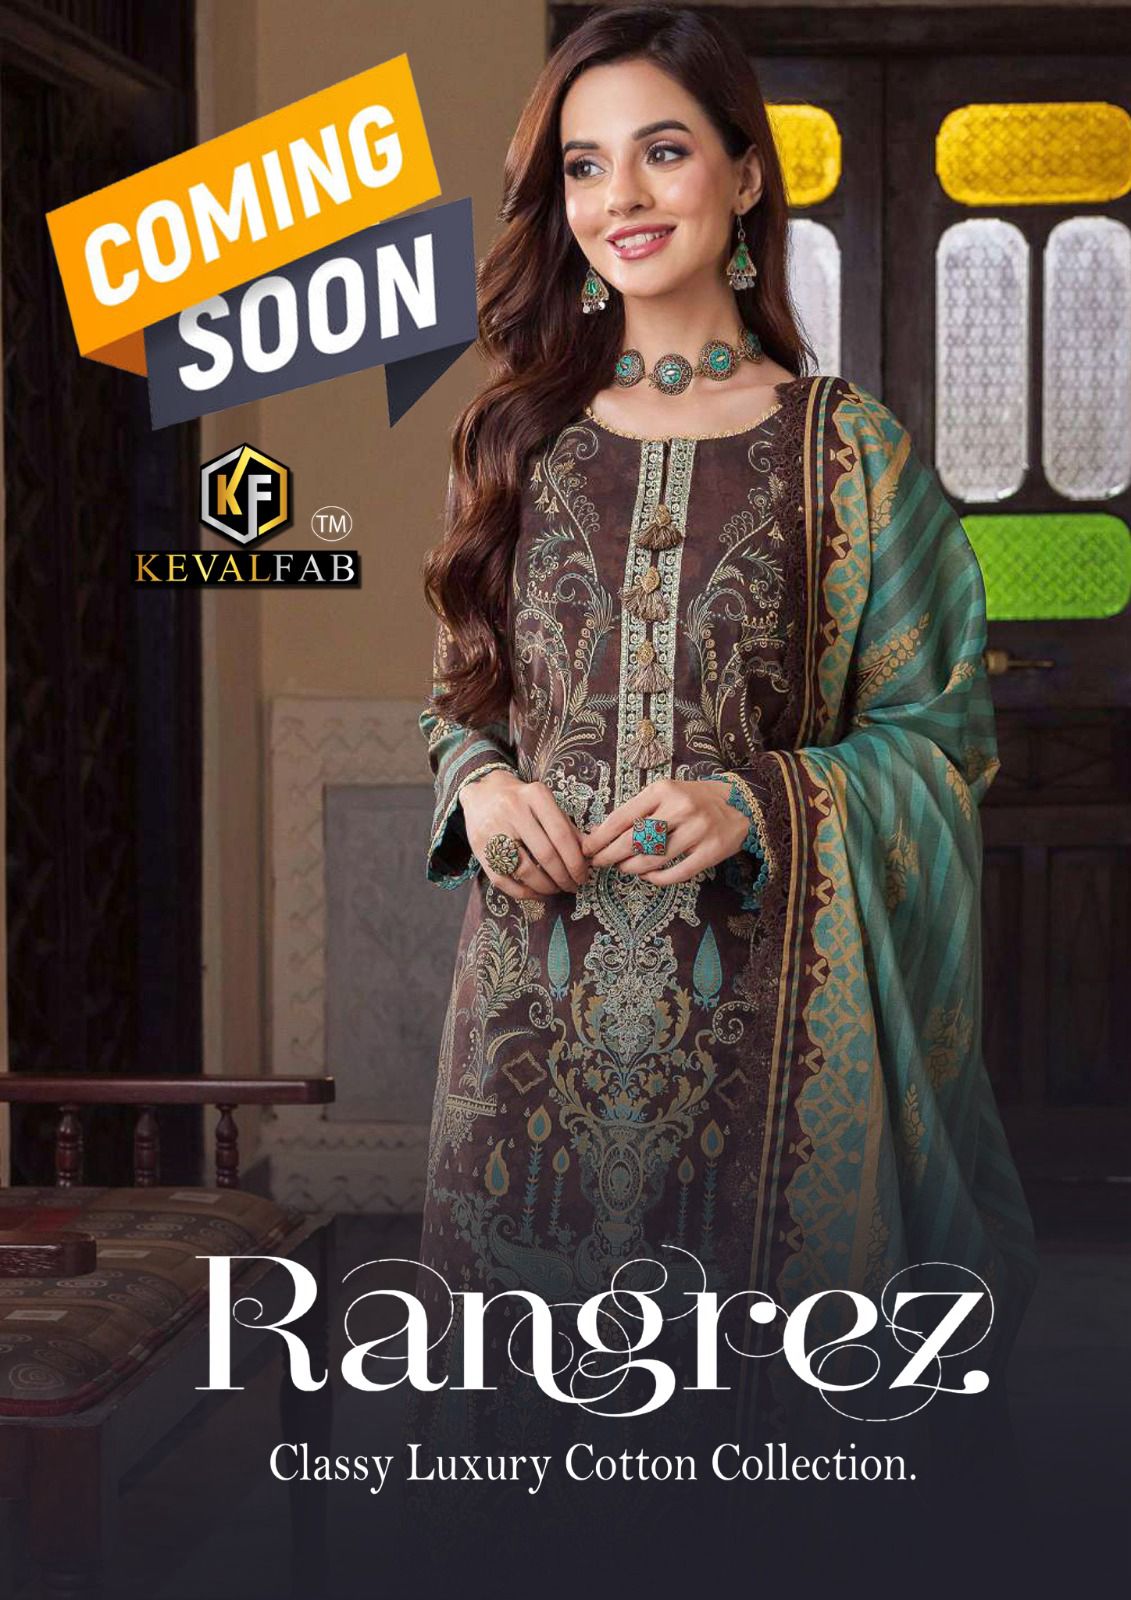 Rangrez Vol 3 Keval Fab Karachi Salwar Suits